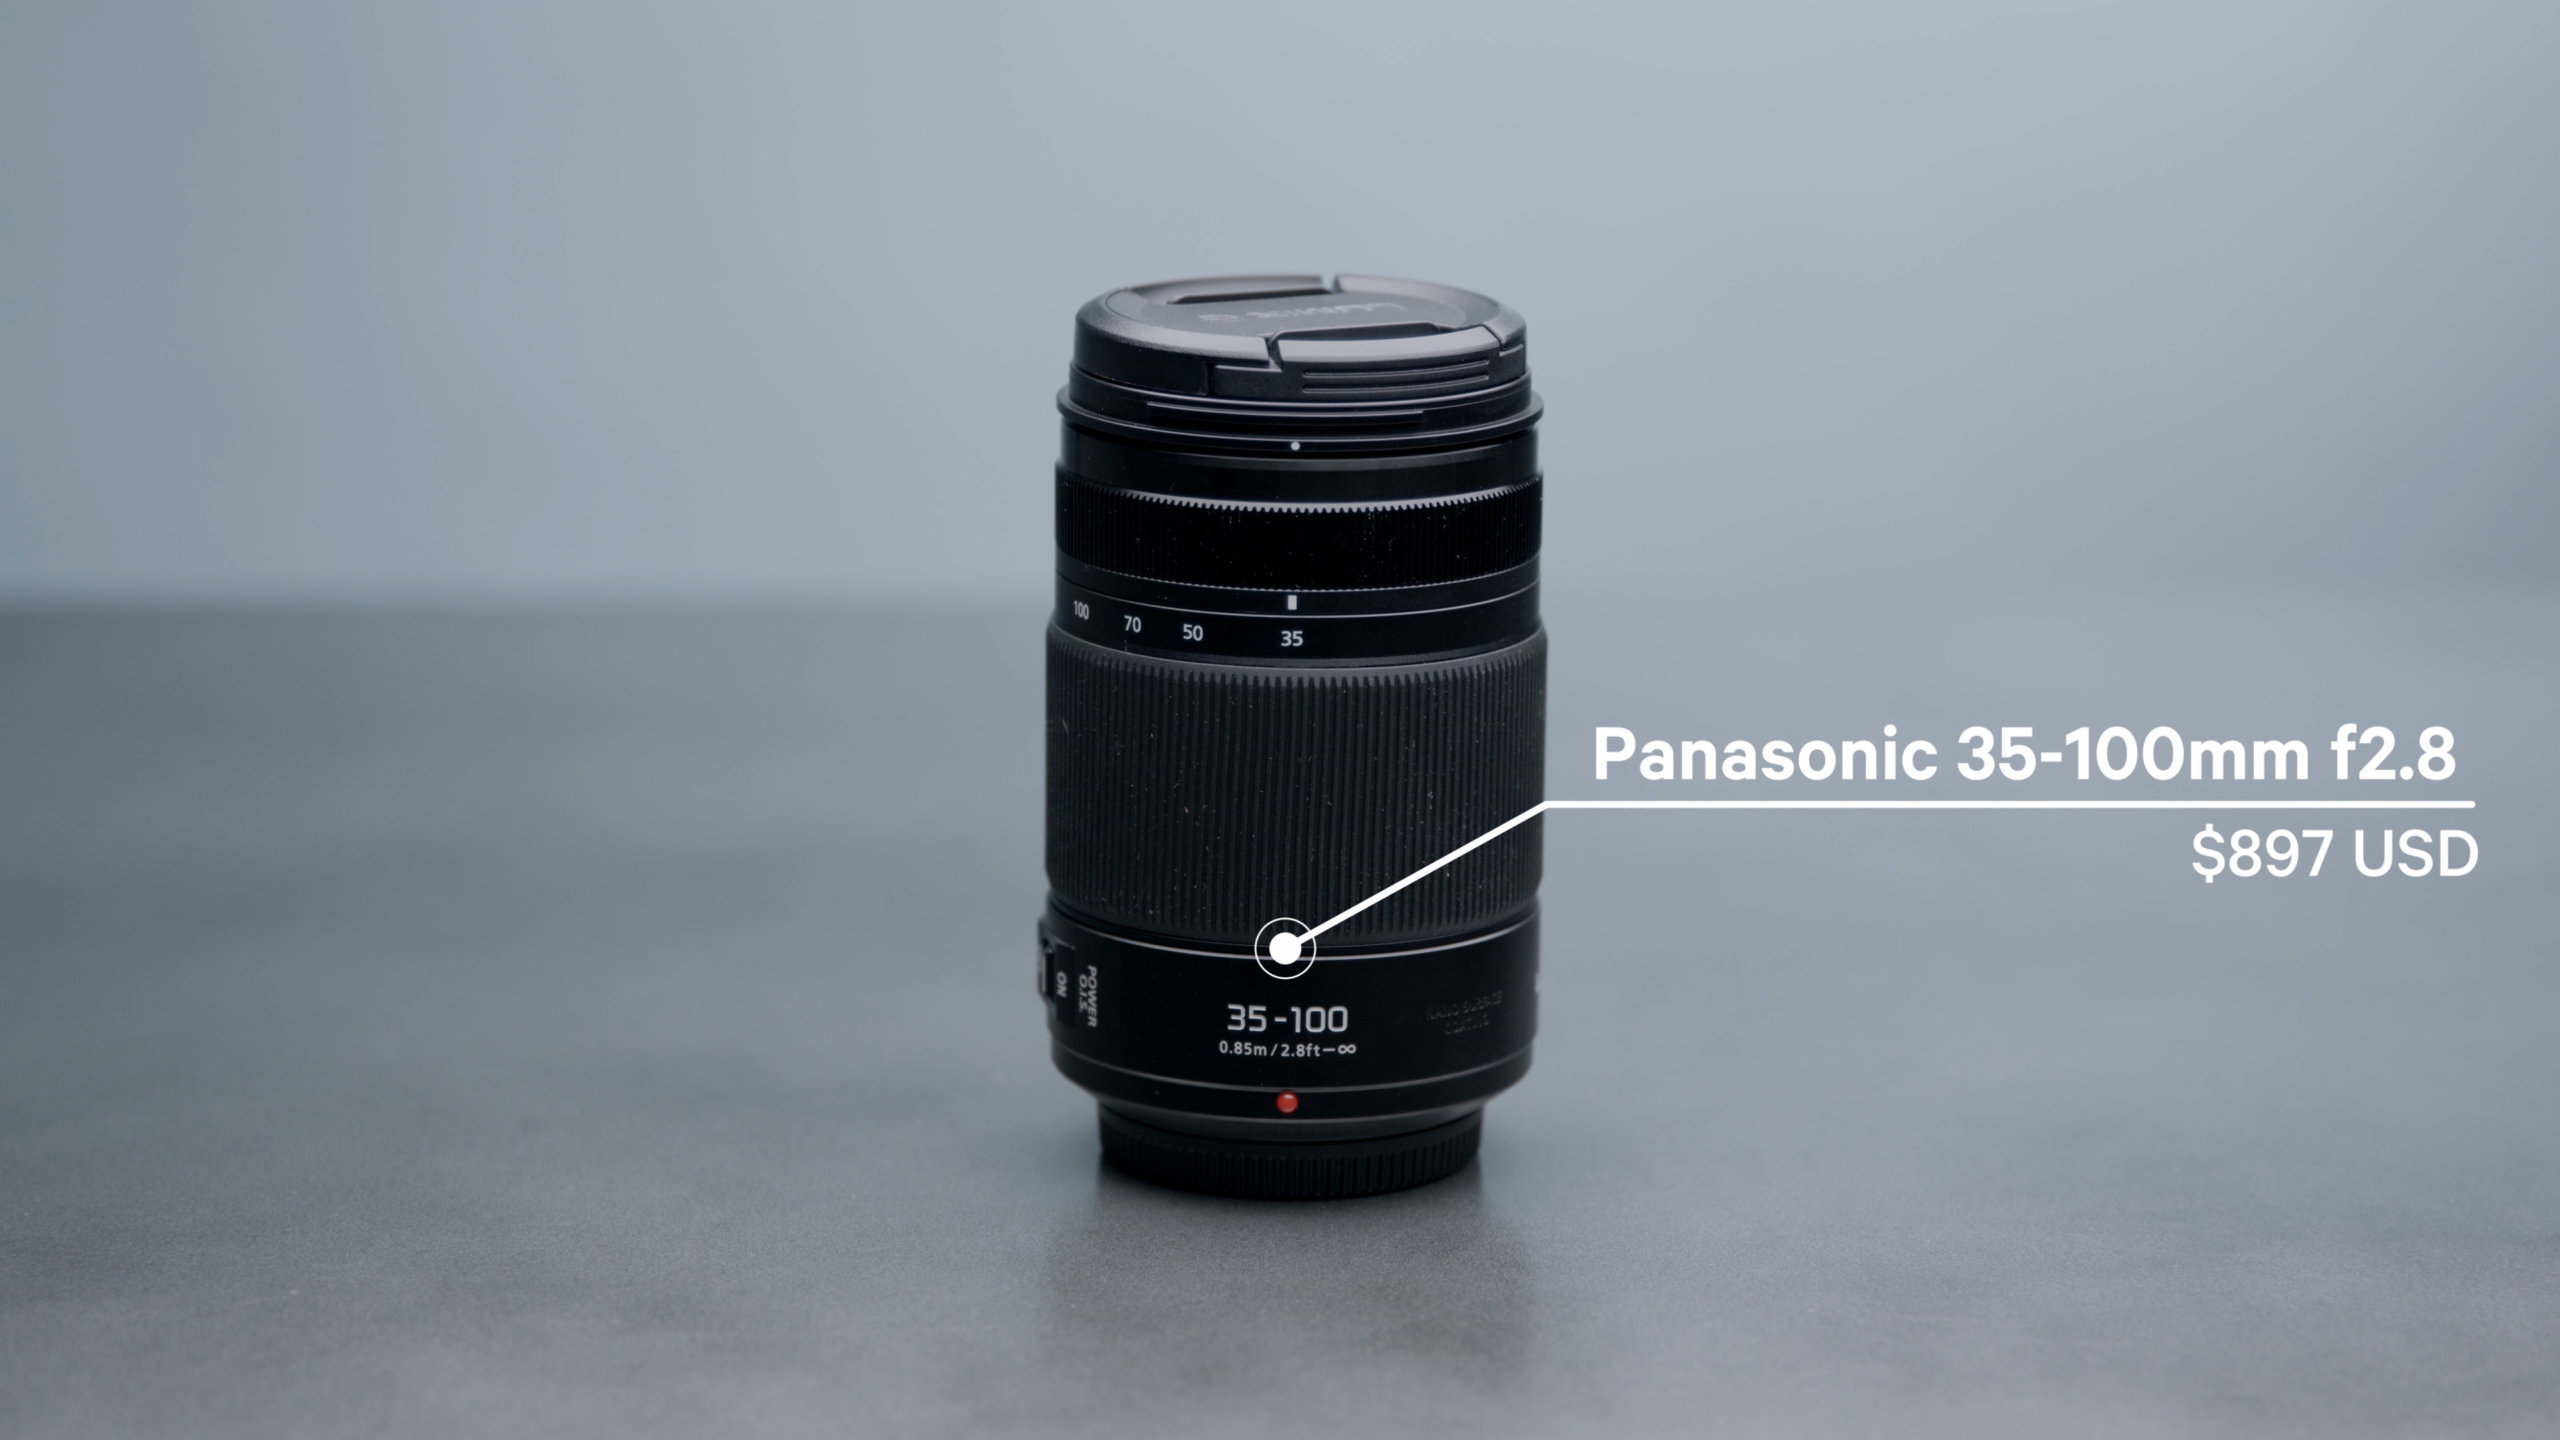 The Panasonic 35-100mm f/2.8